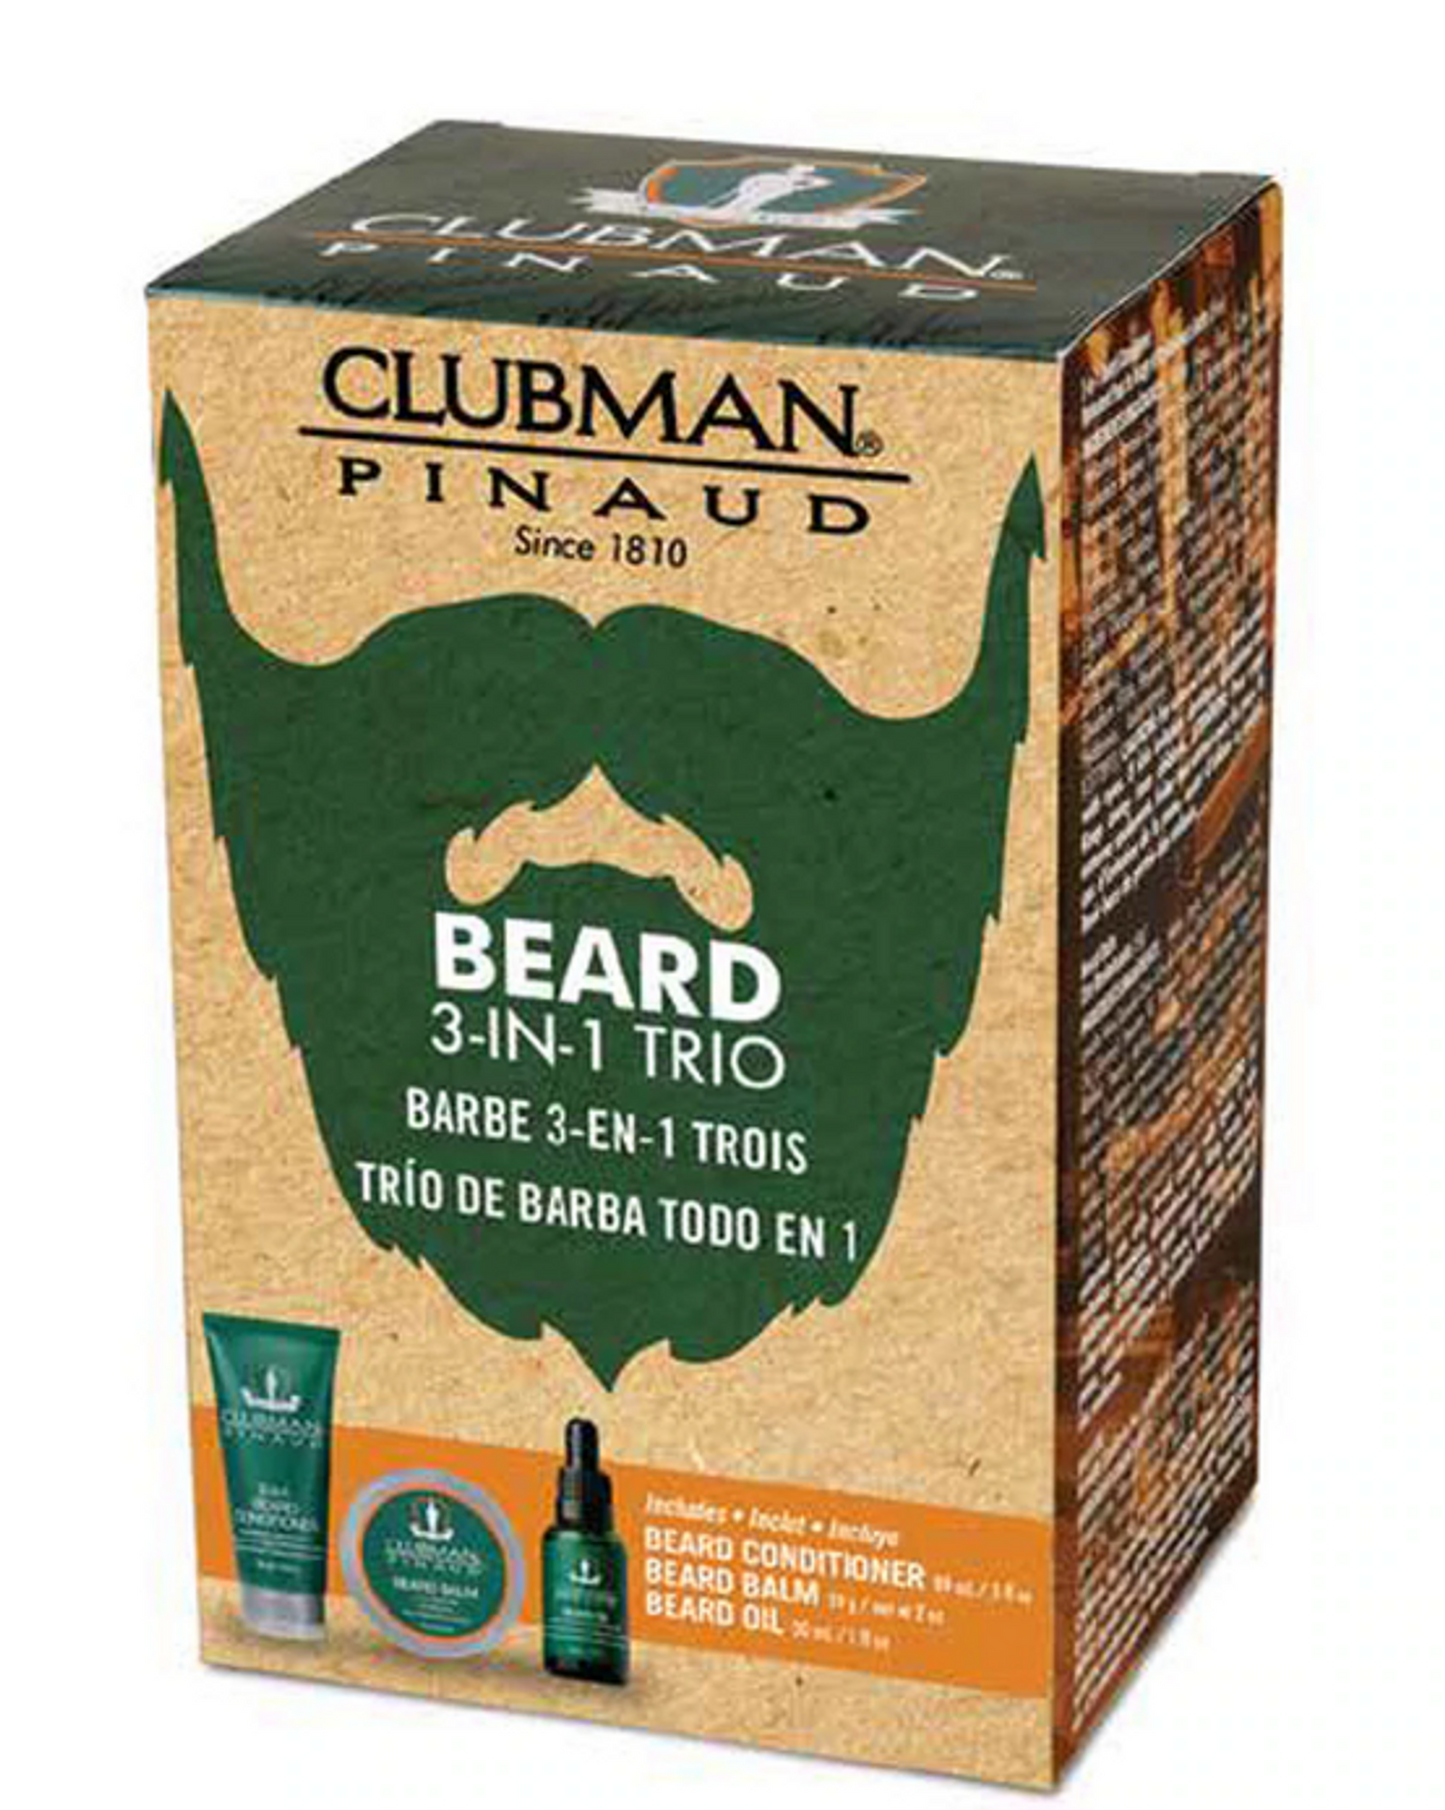 Clubman Pinaud Beard Grooming Kit